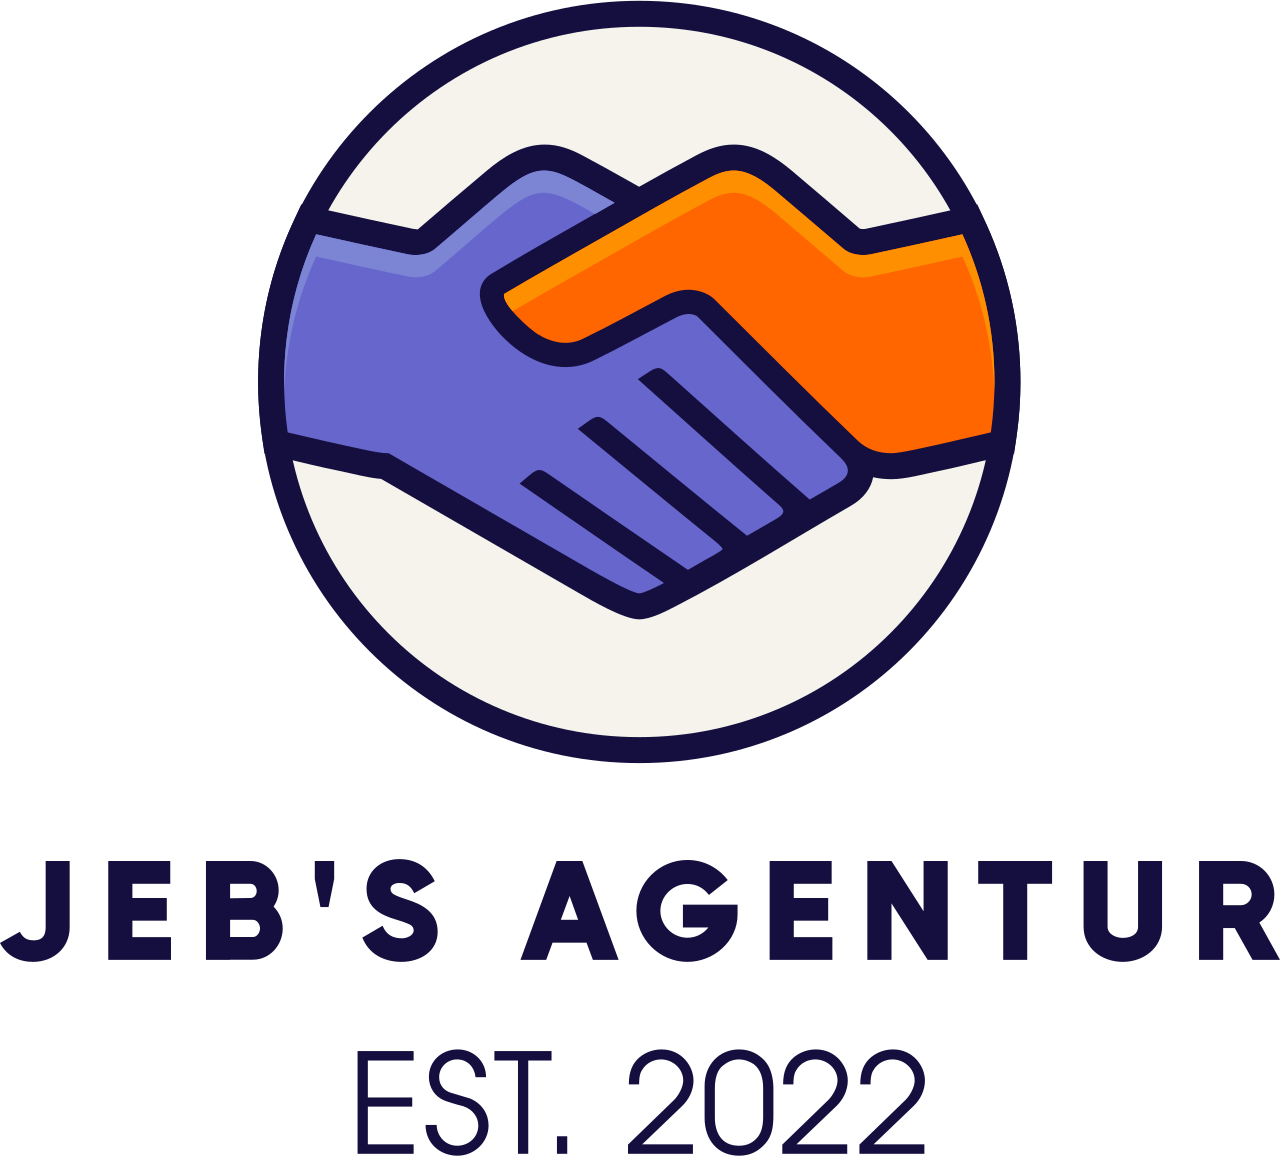 JEB'S AGENTUR's web page